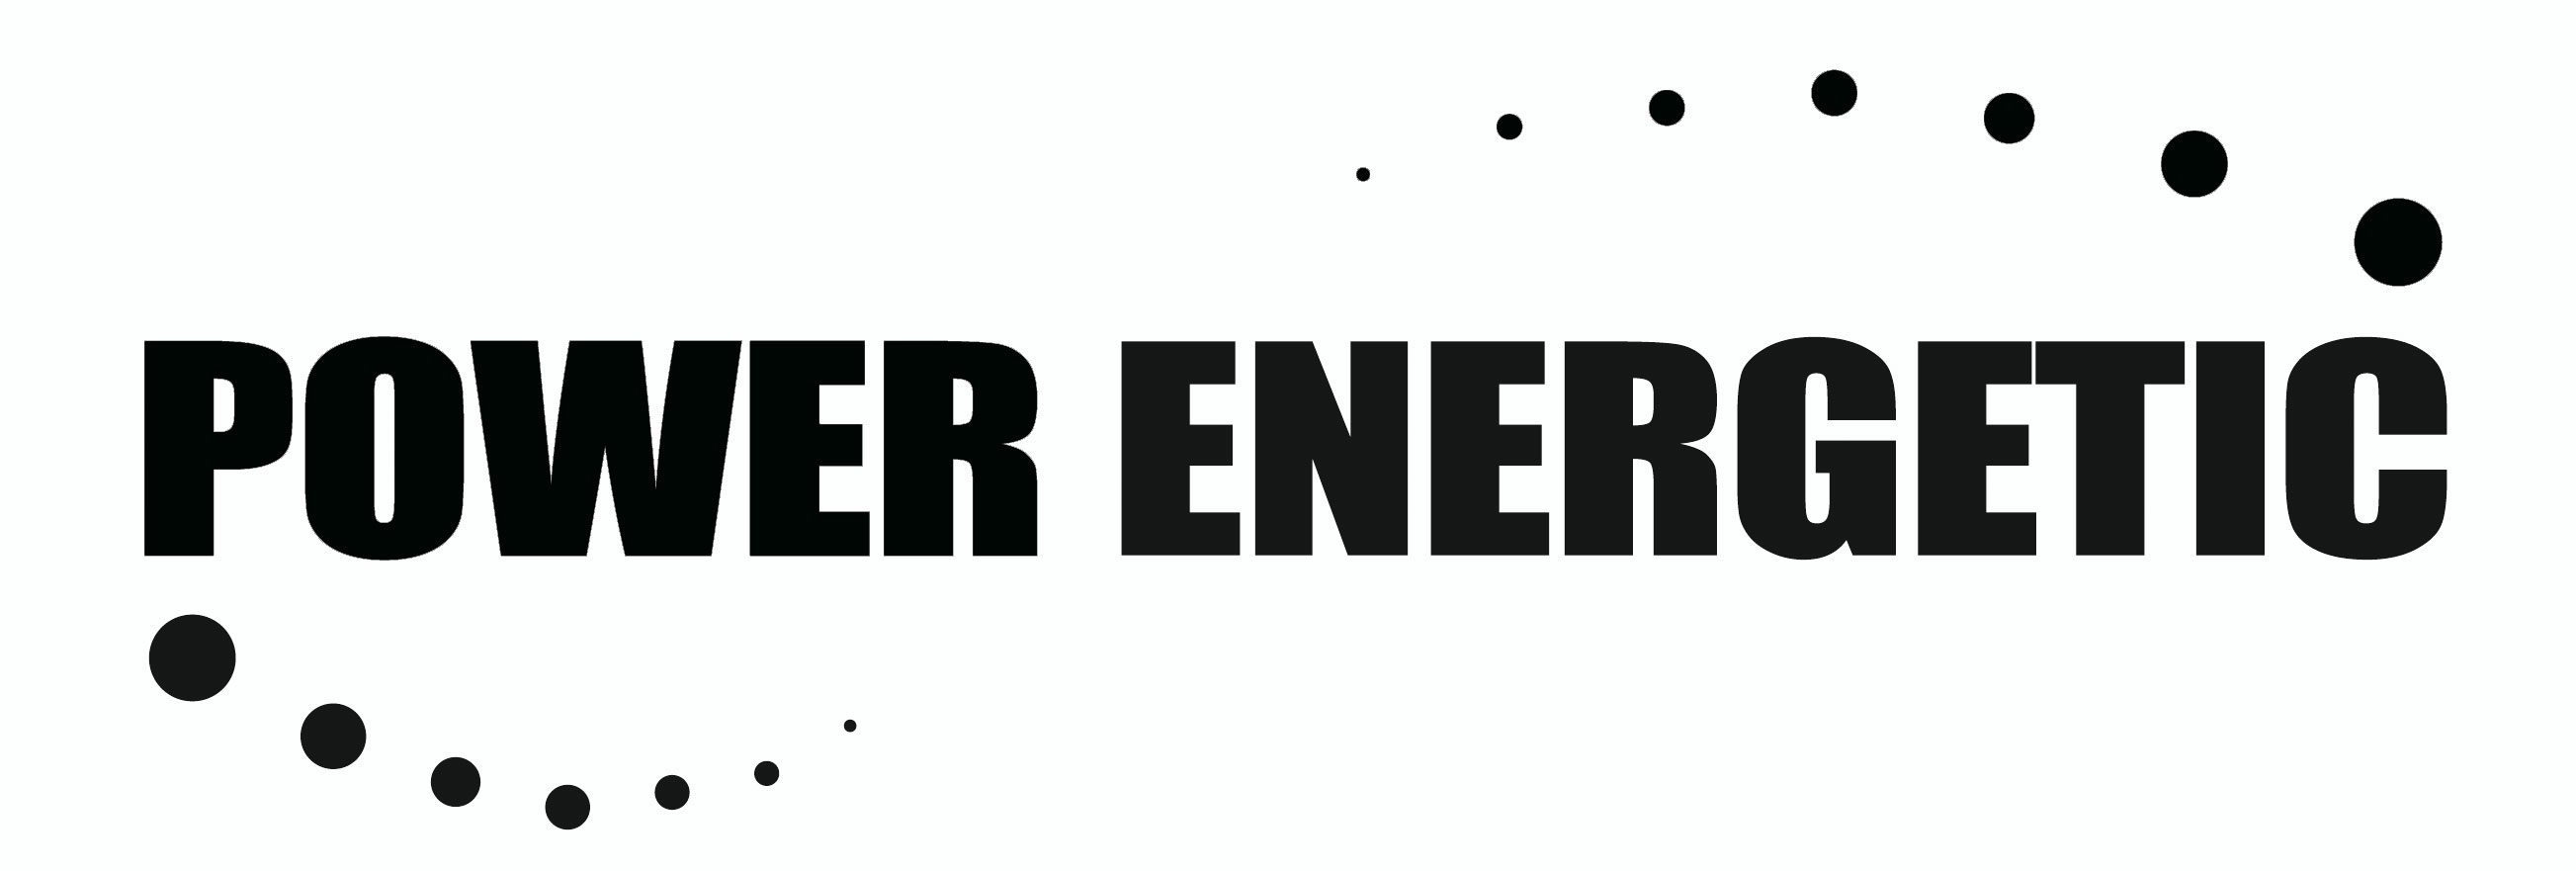 Logo PowerEnergetic negro